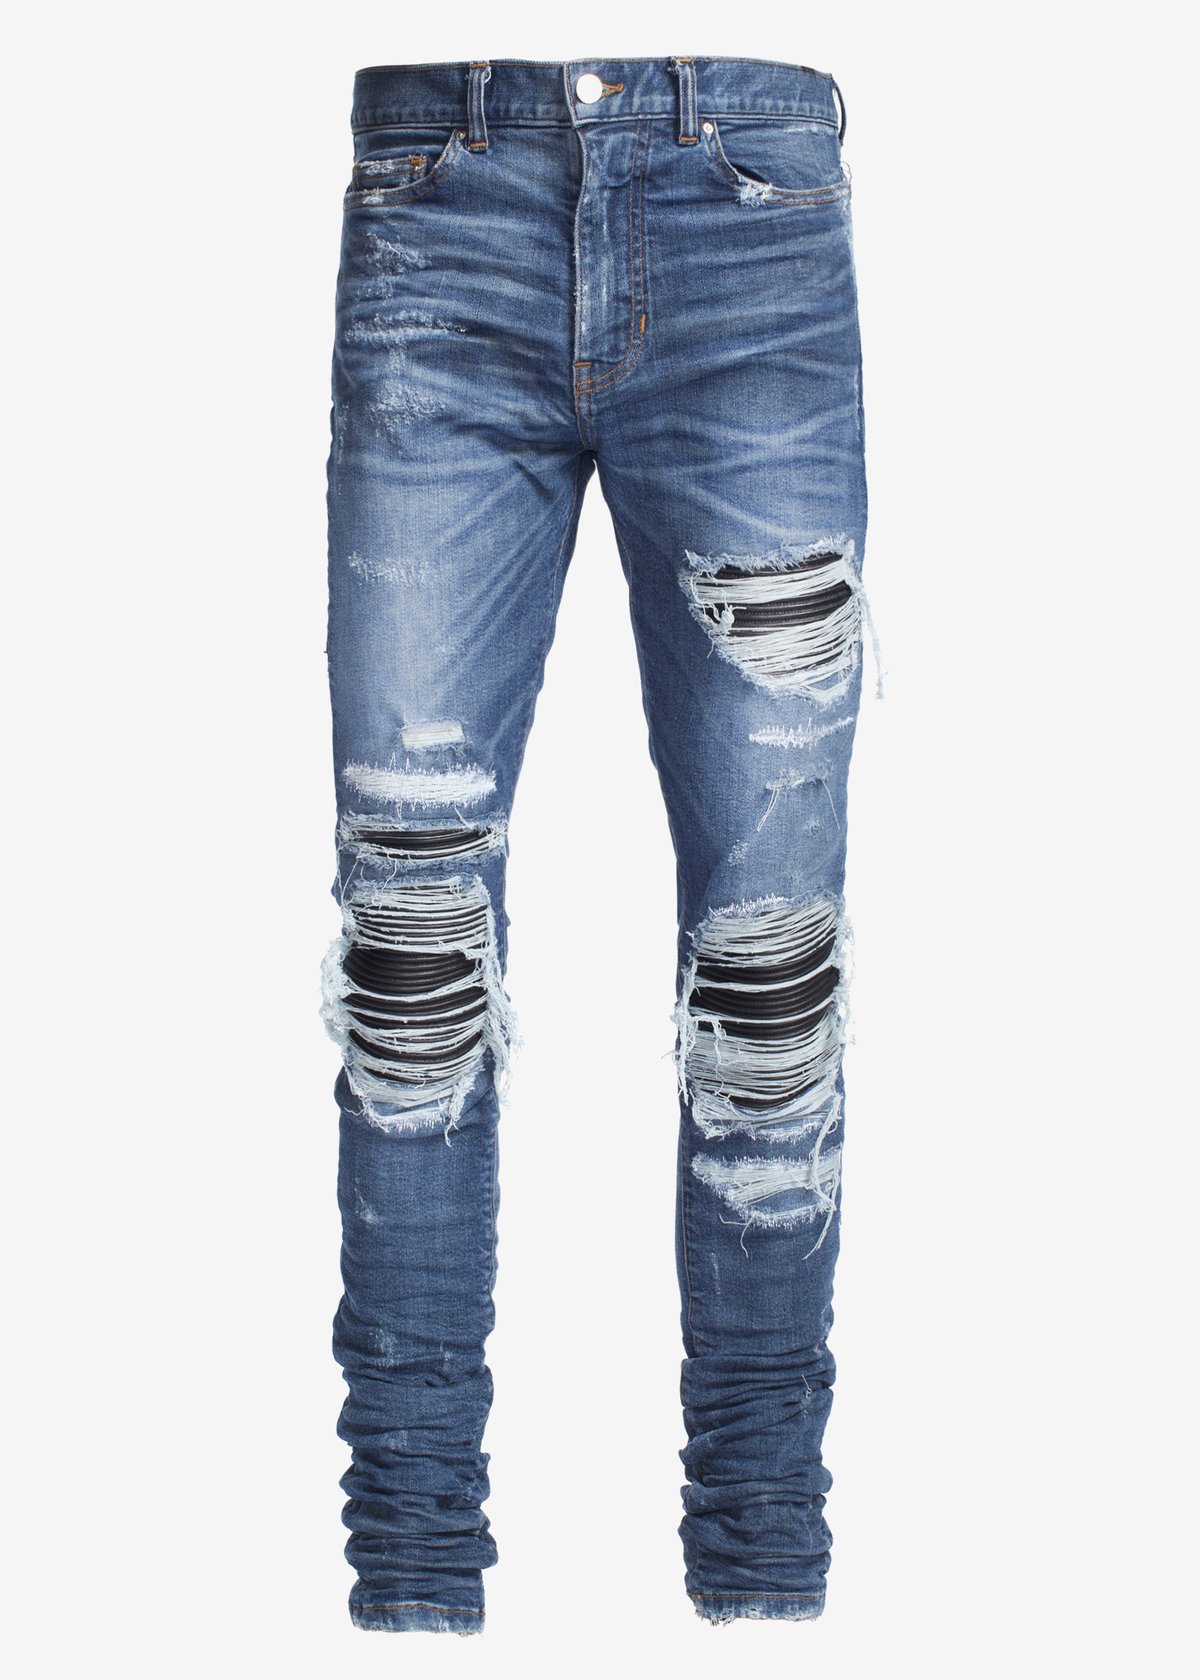 levi's 526 women's jeans